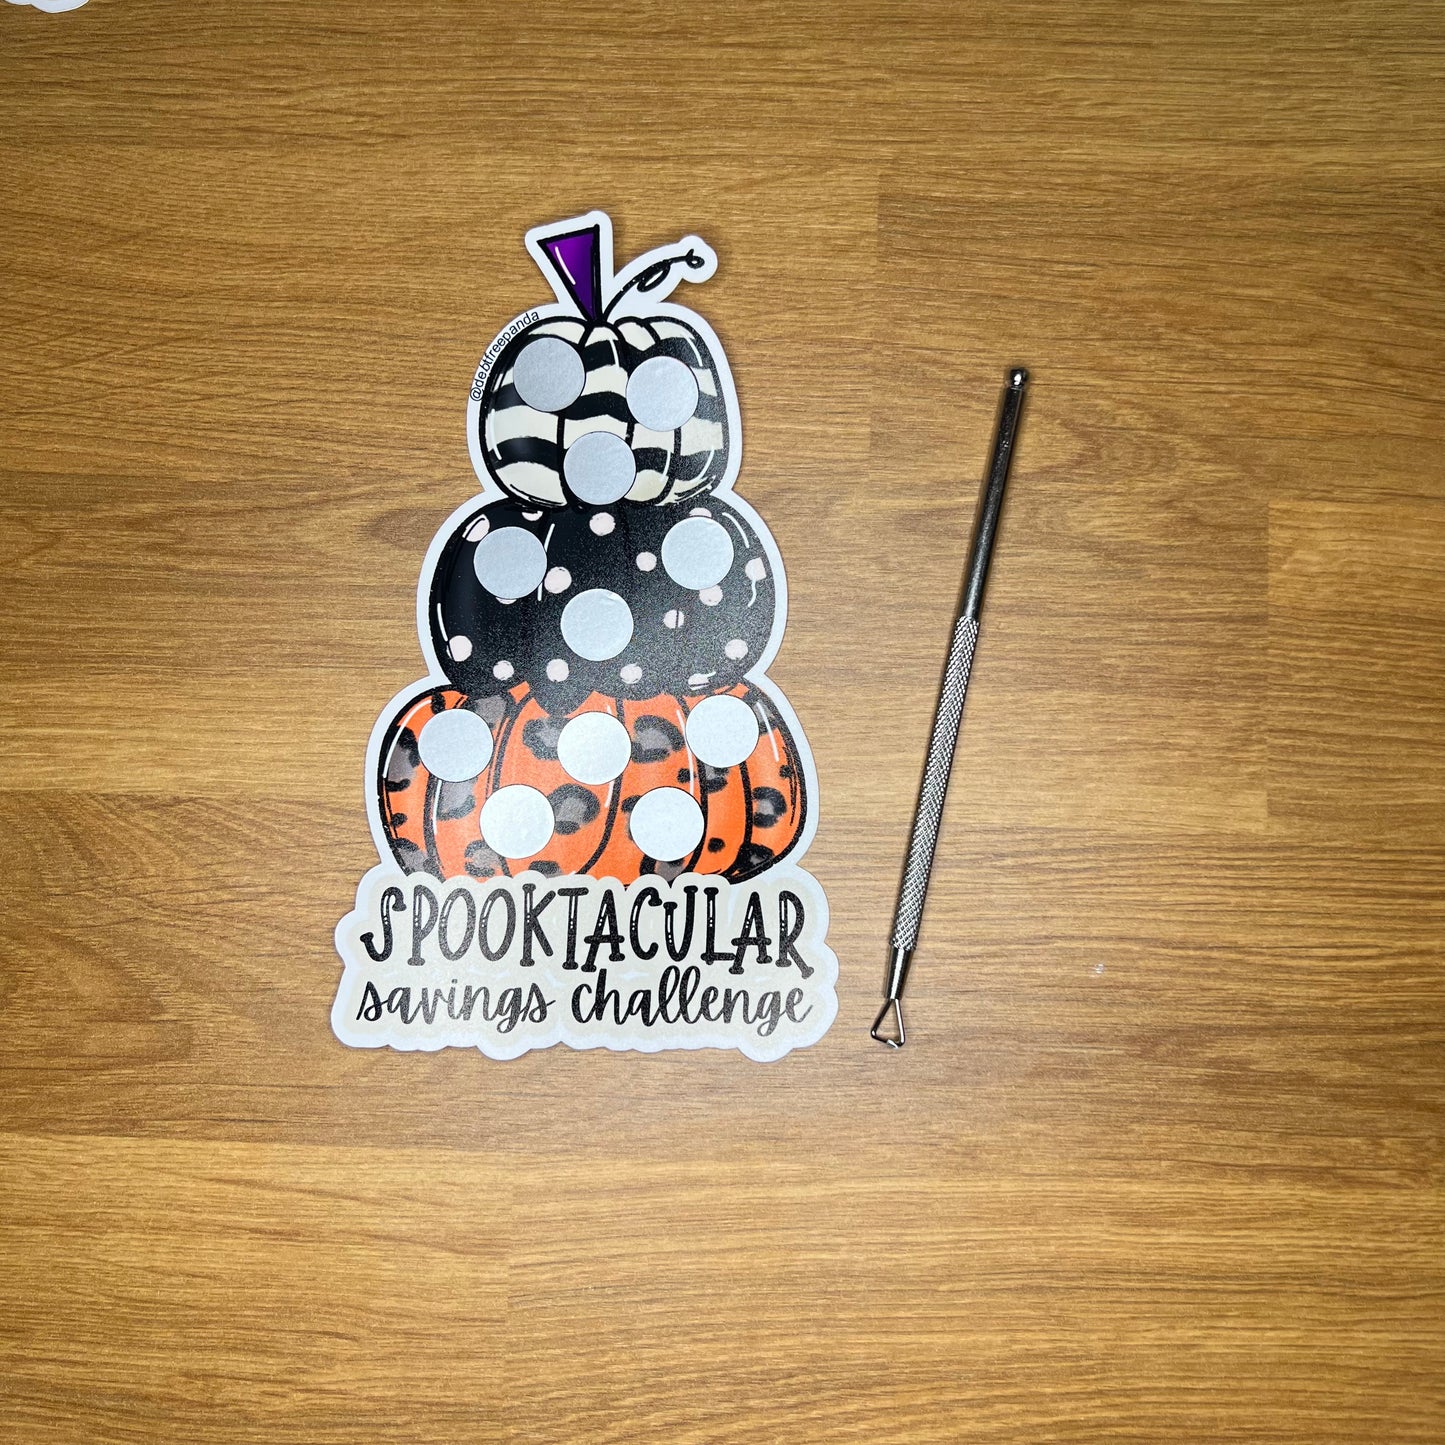 Spooktacular Savings Challenge Scratcher - Fun Halloween Scratcher!